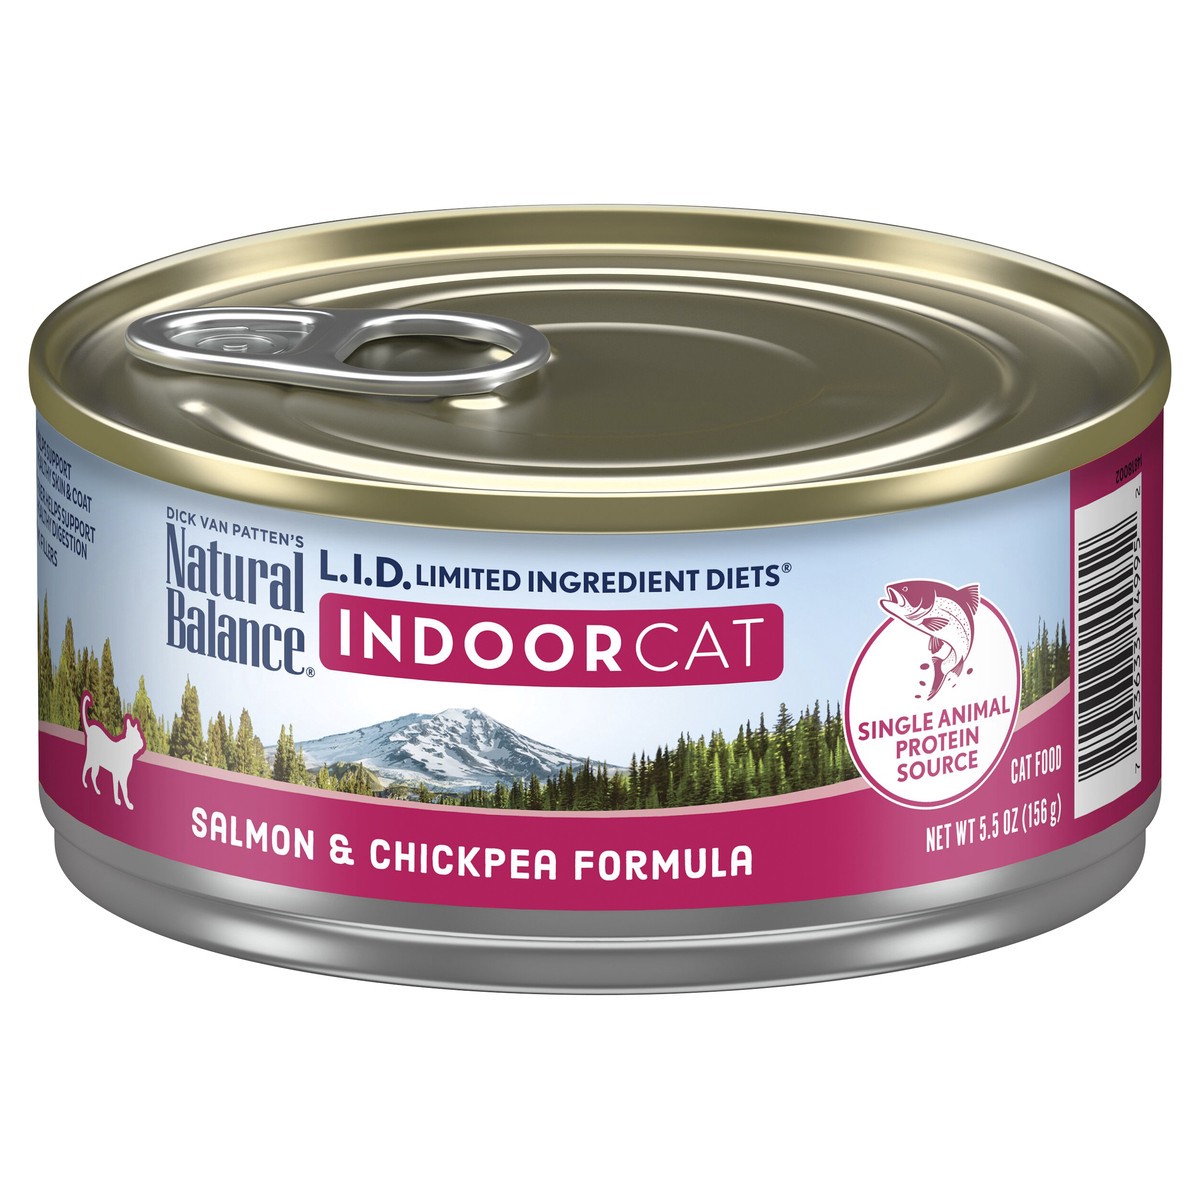 slide 6 of 7, Natural Balance Limited Ingredient Diets Indoor Cat Salmon & Chickpea Formula Cat Food 5.5 oz, 5.5 oz